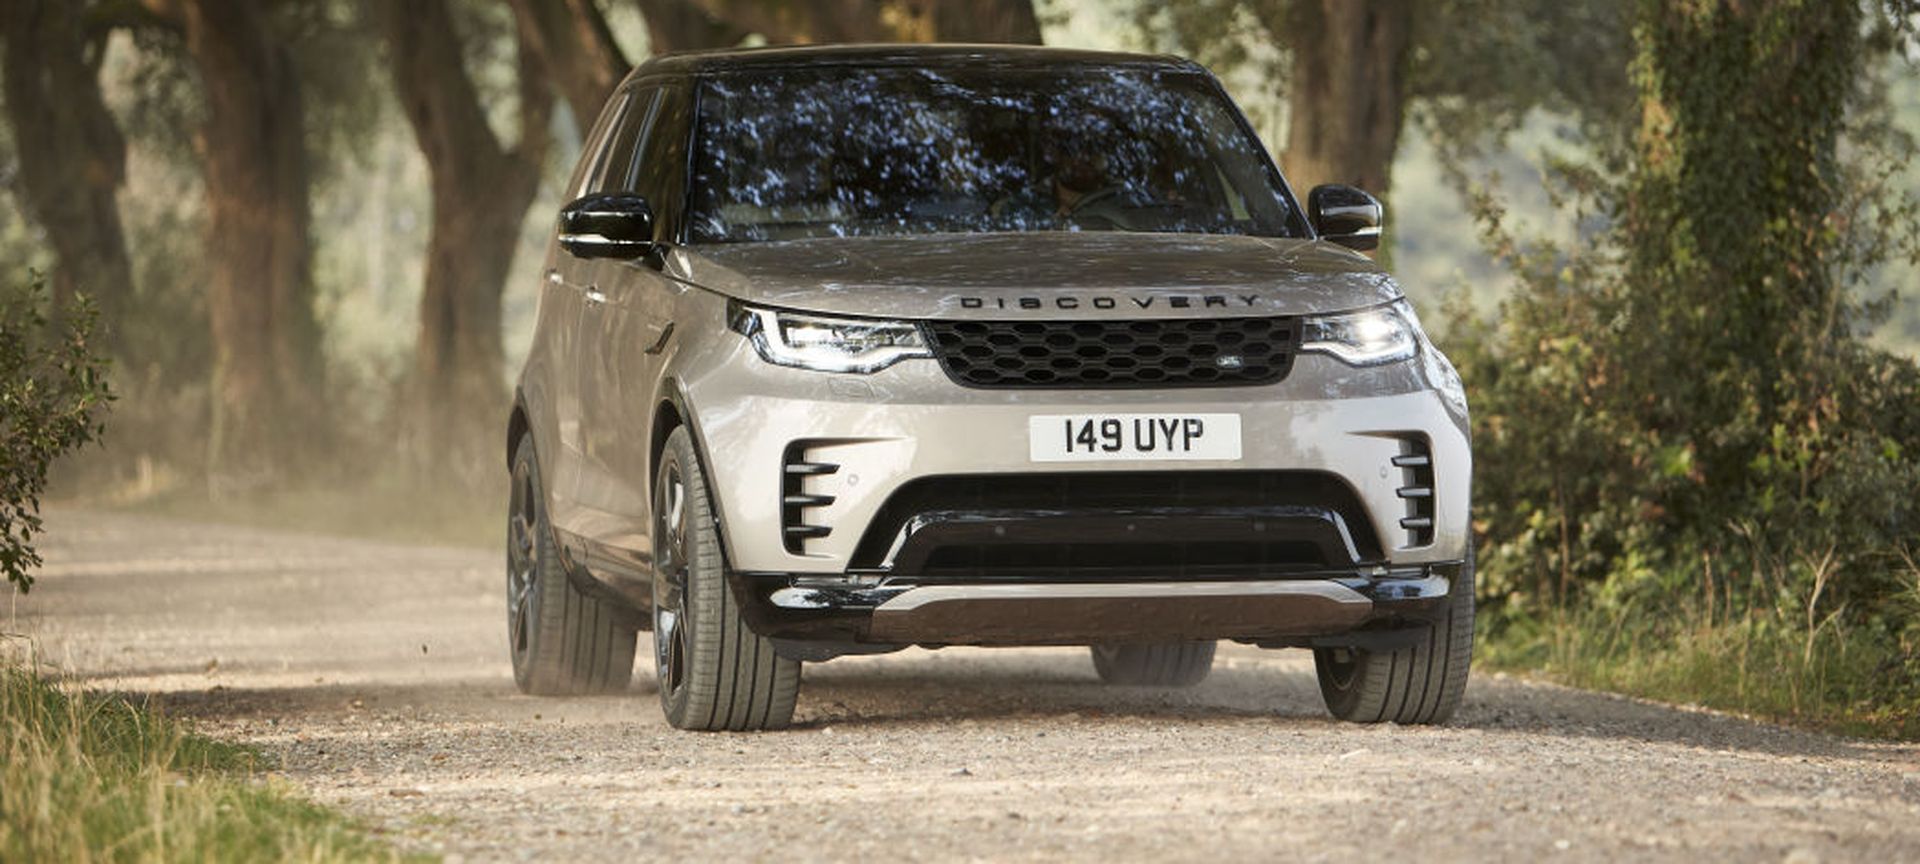 Land Rover Discovery 2021 SUV z technologią miękkiej